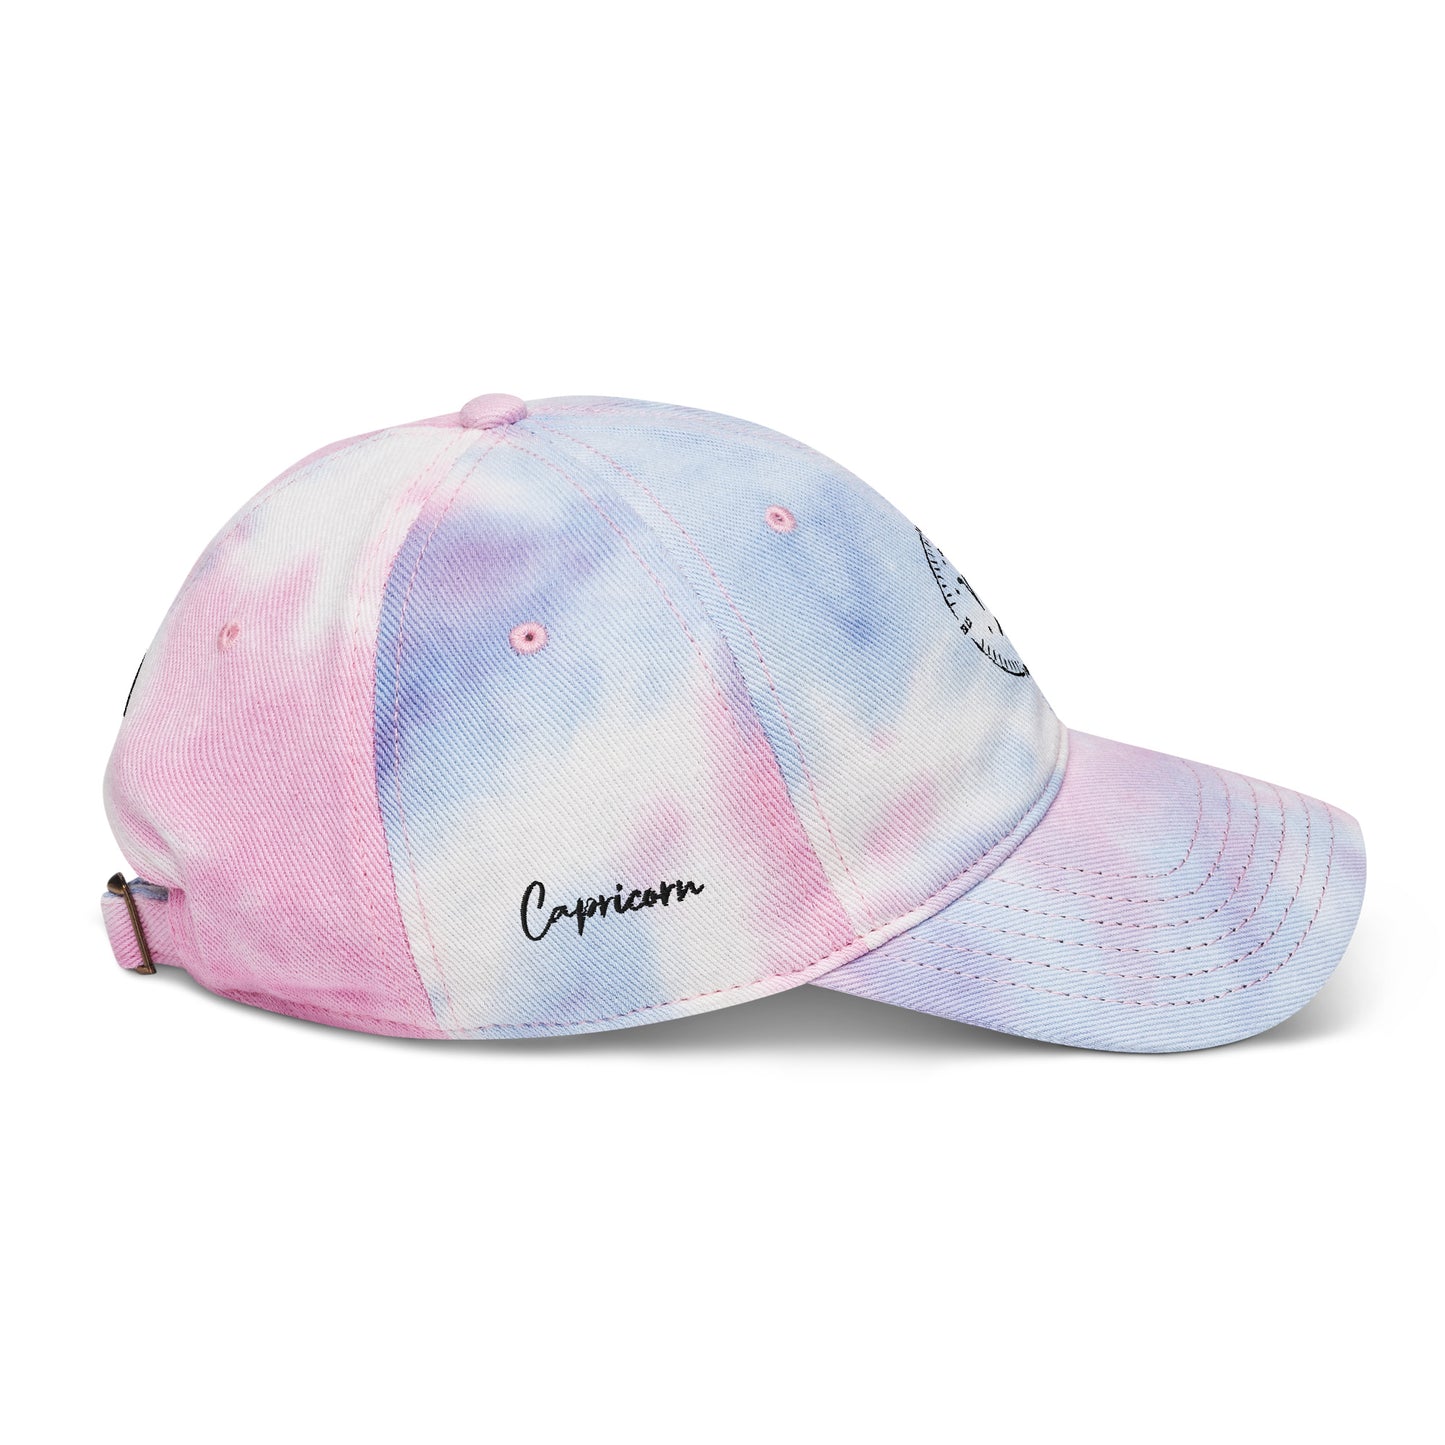 Capricorn Tie dye hat